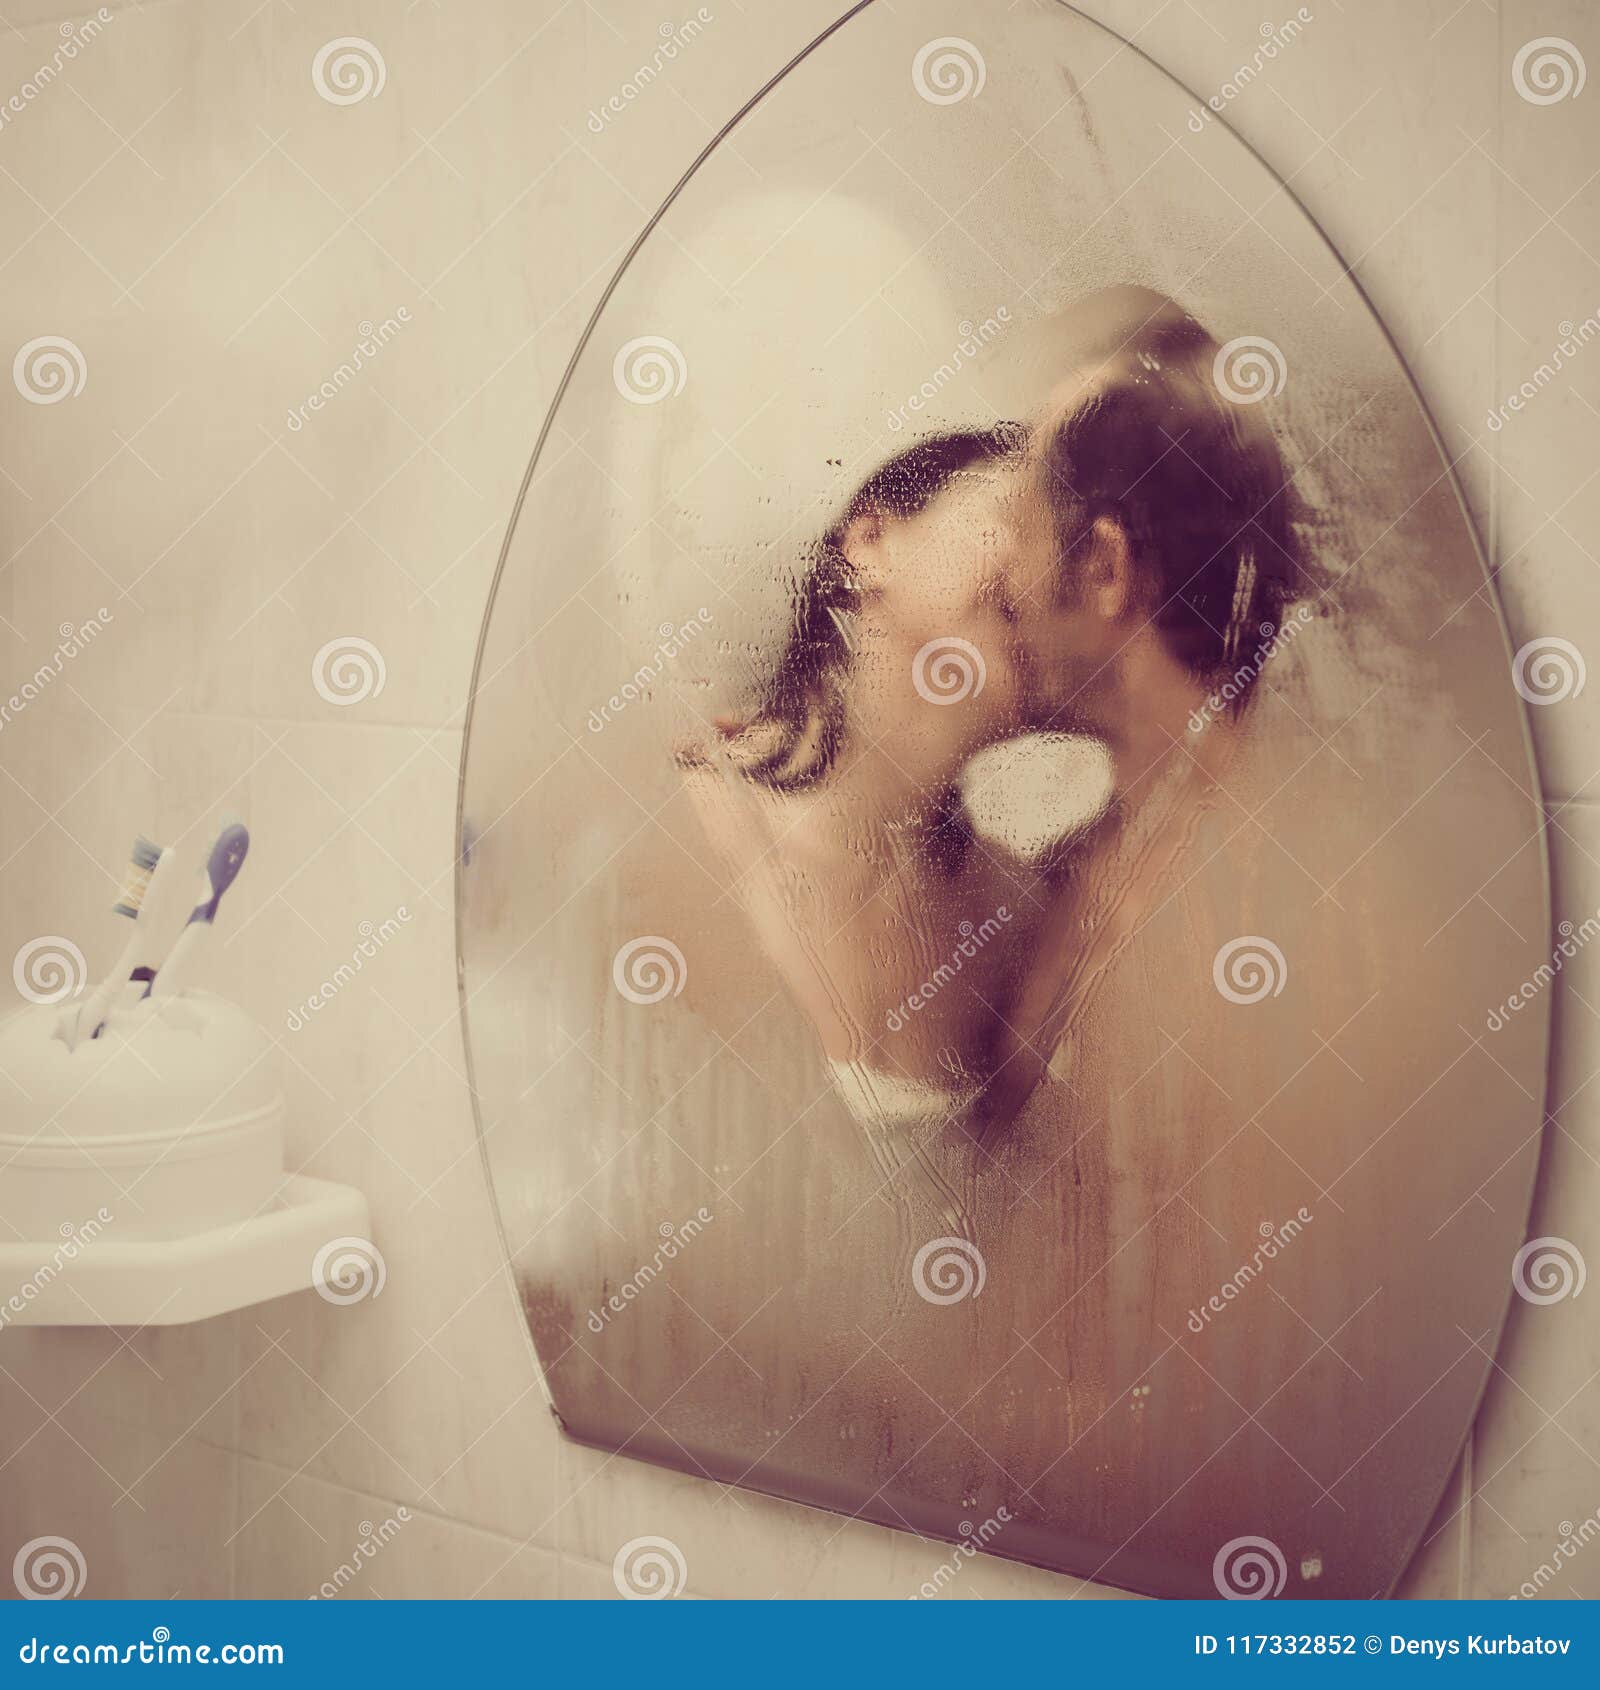 bradley nunes add people kissing in the shower photo